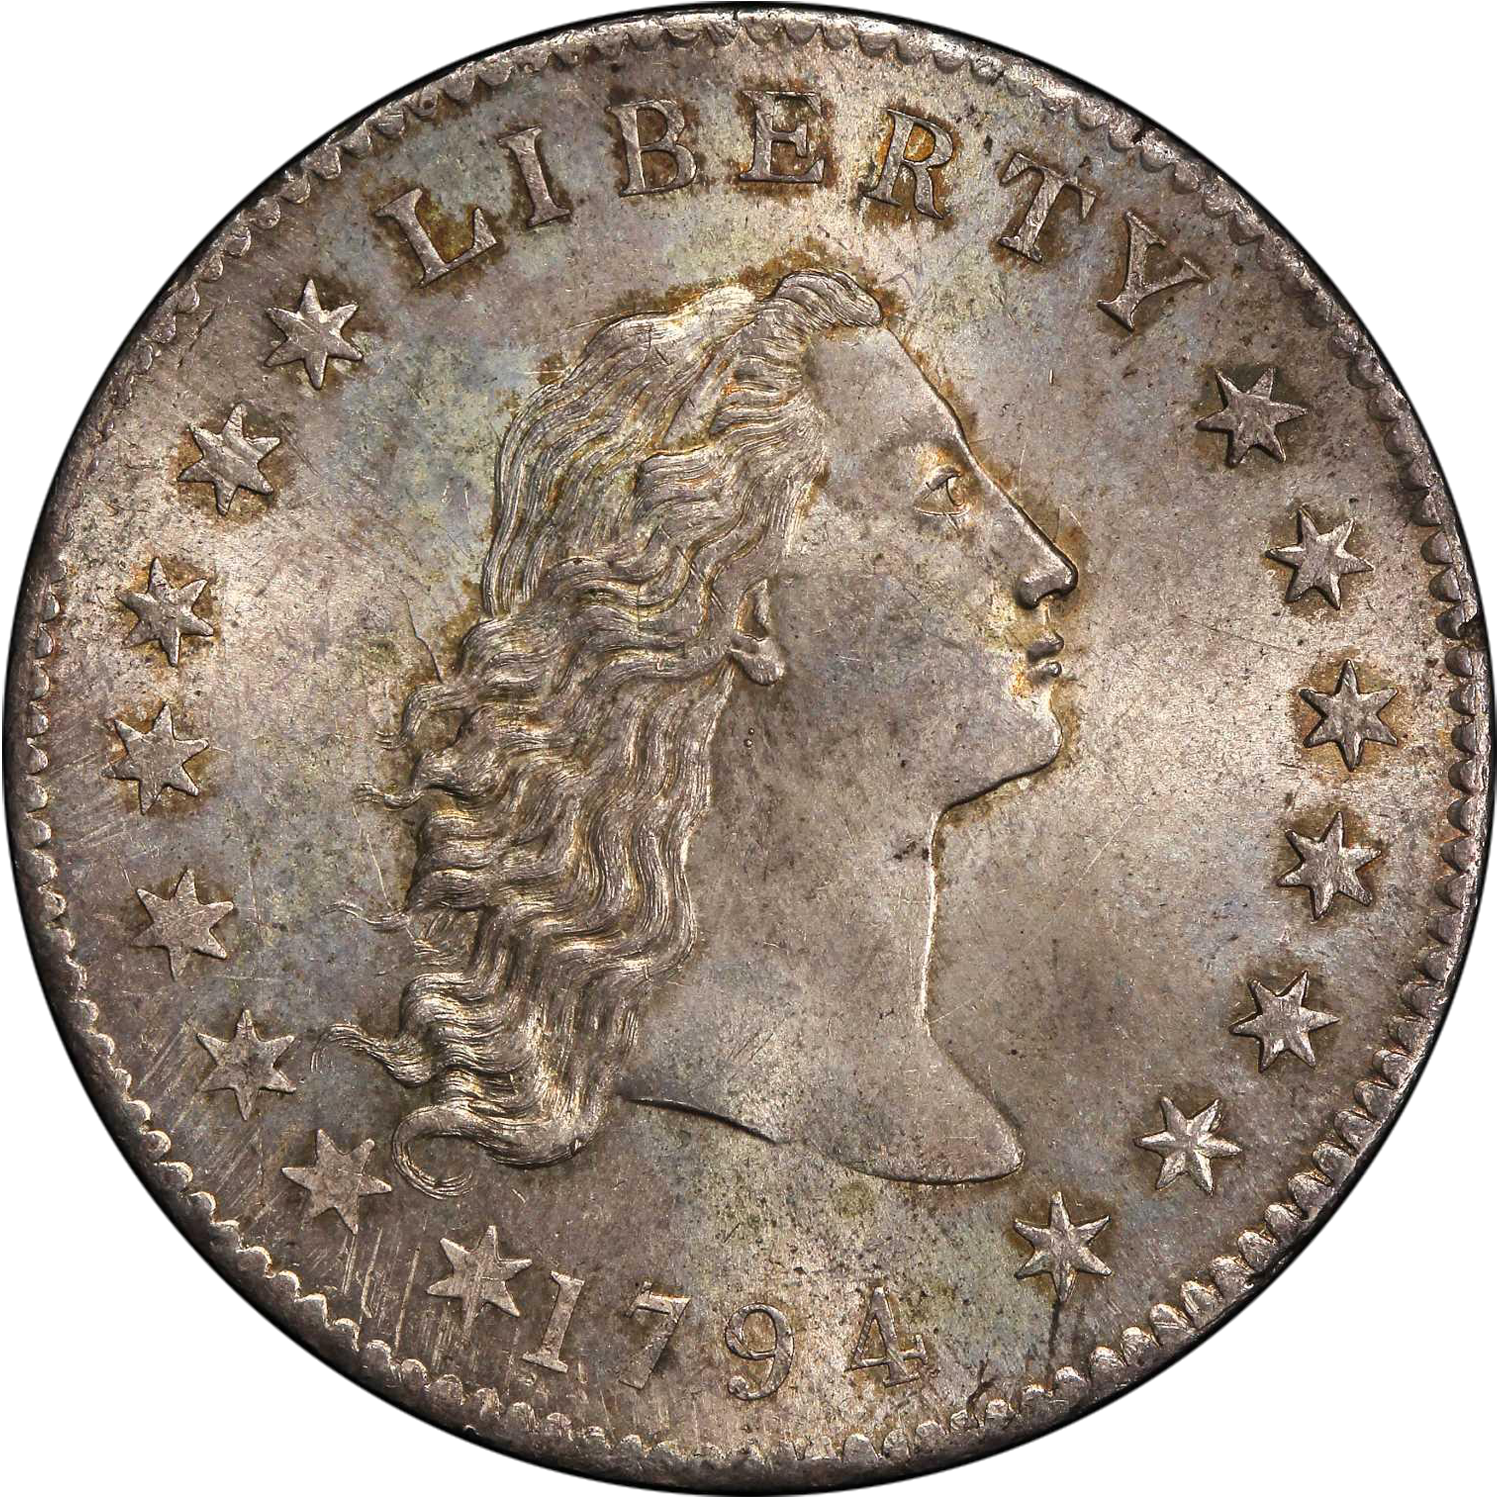 1794 flowing hair dollar